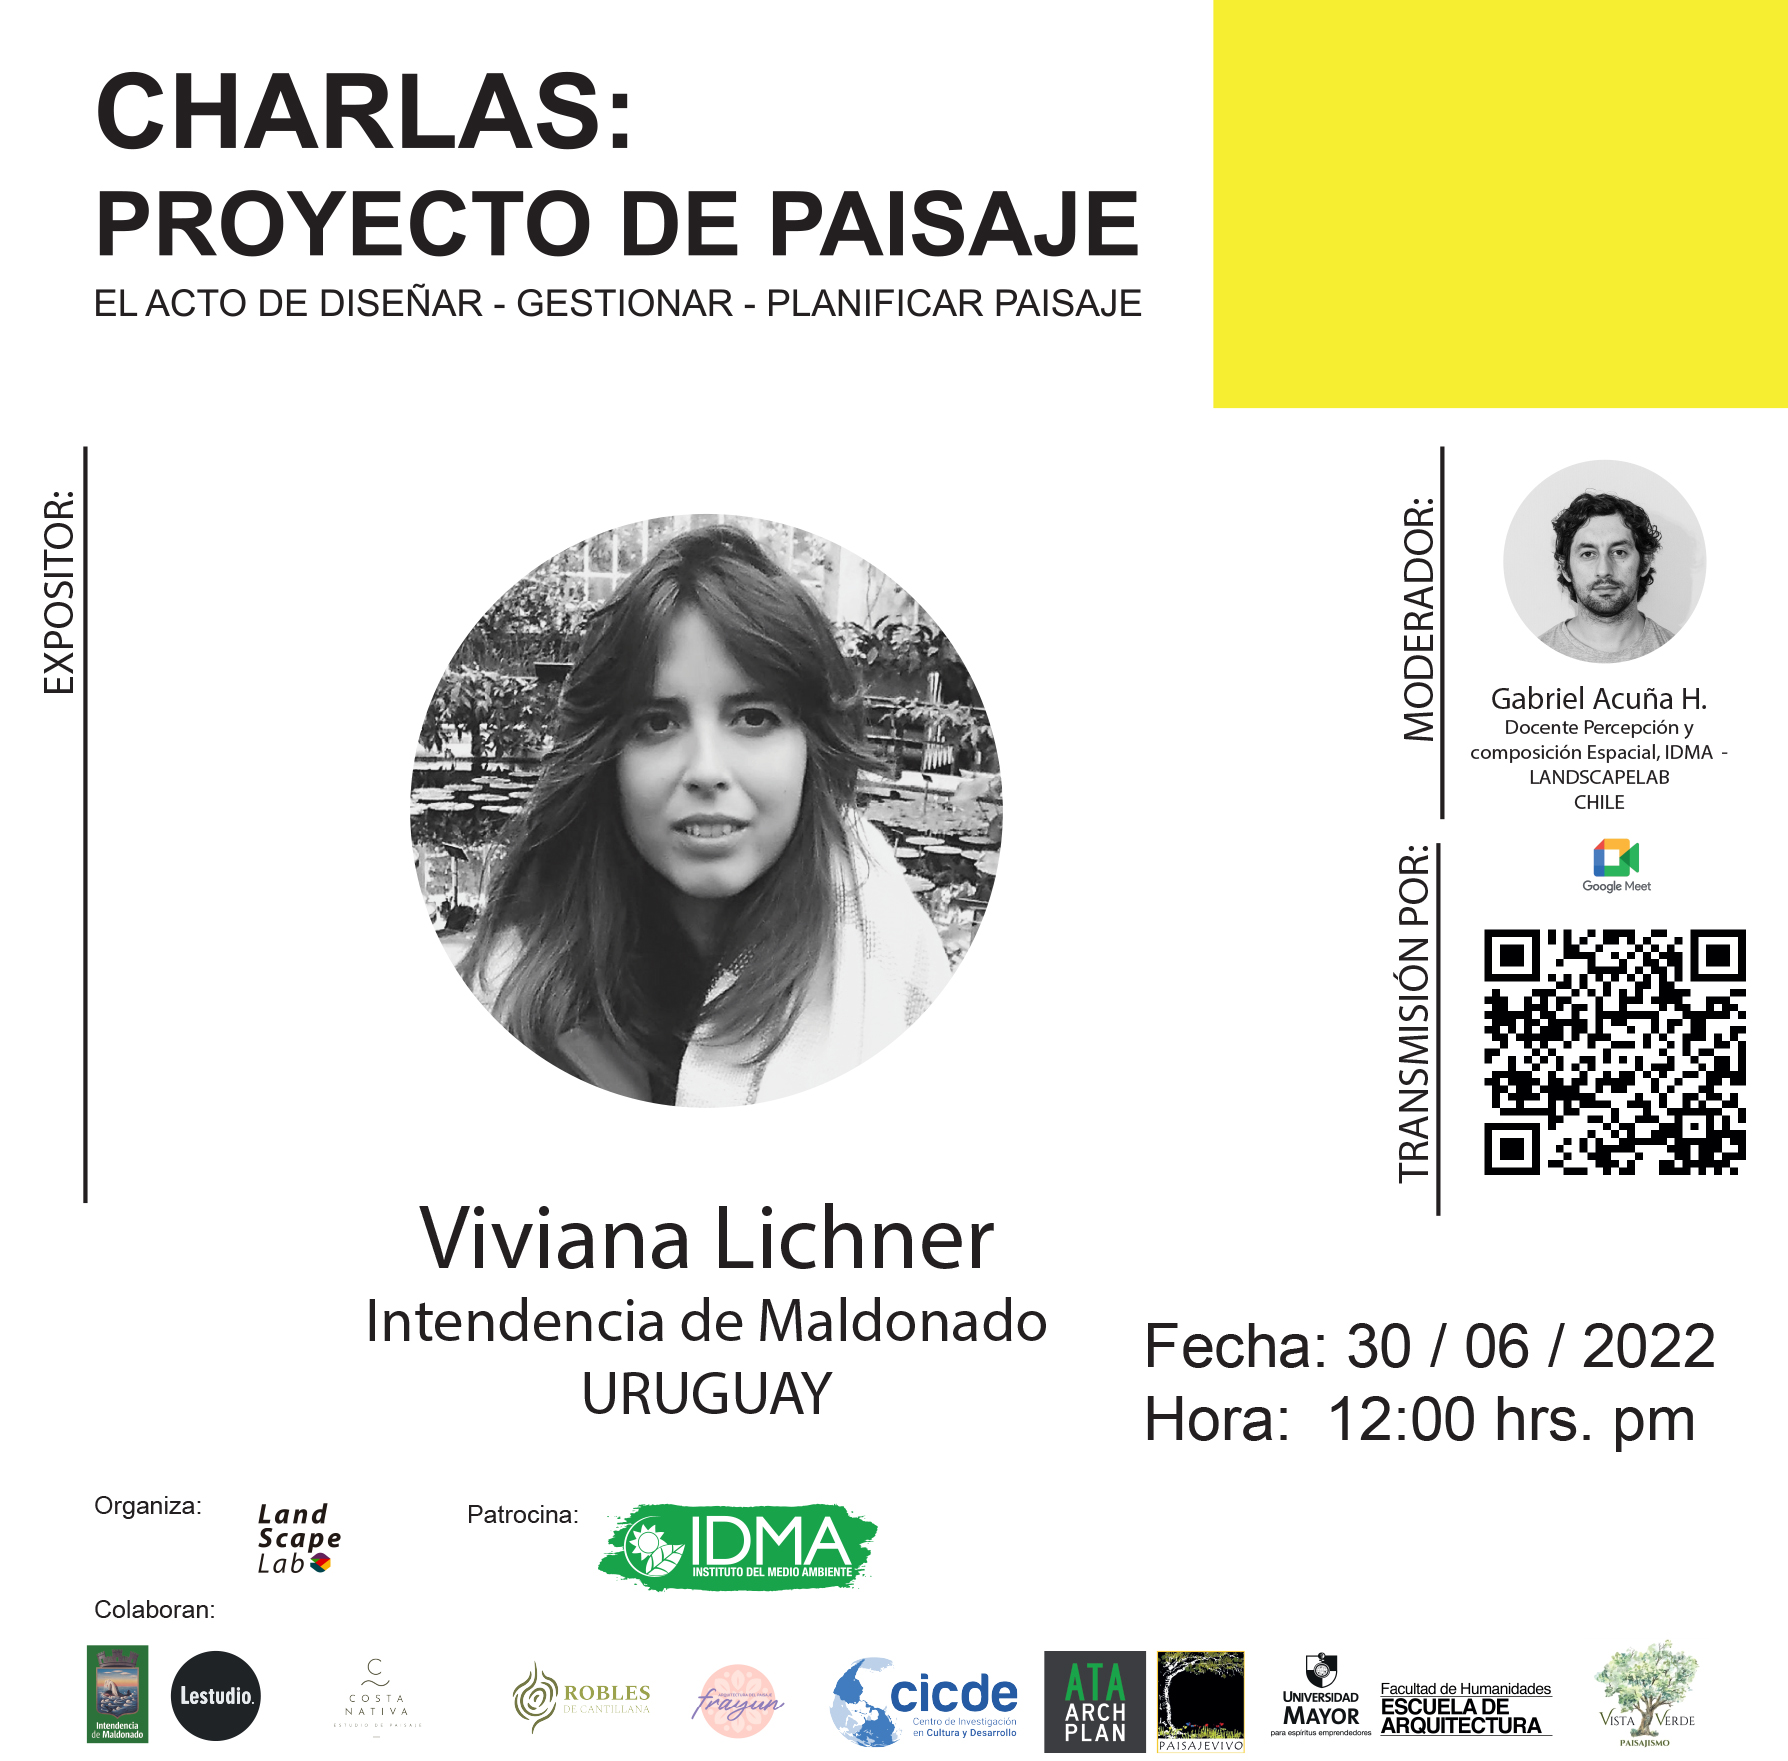 Charla Proyecto de Paisaje: Viviana Lichner Uruguay